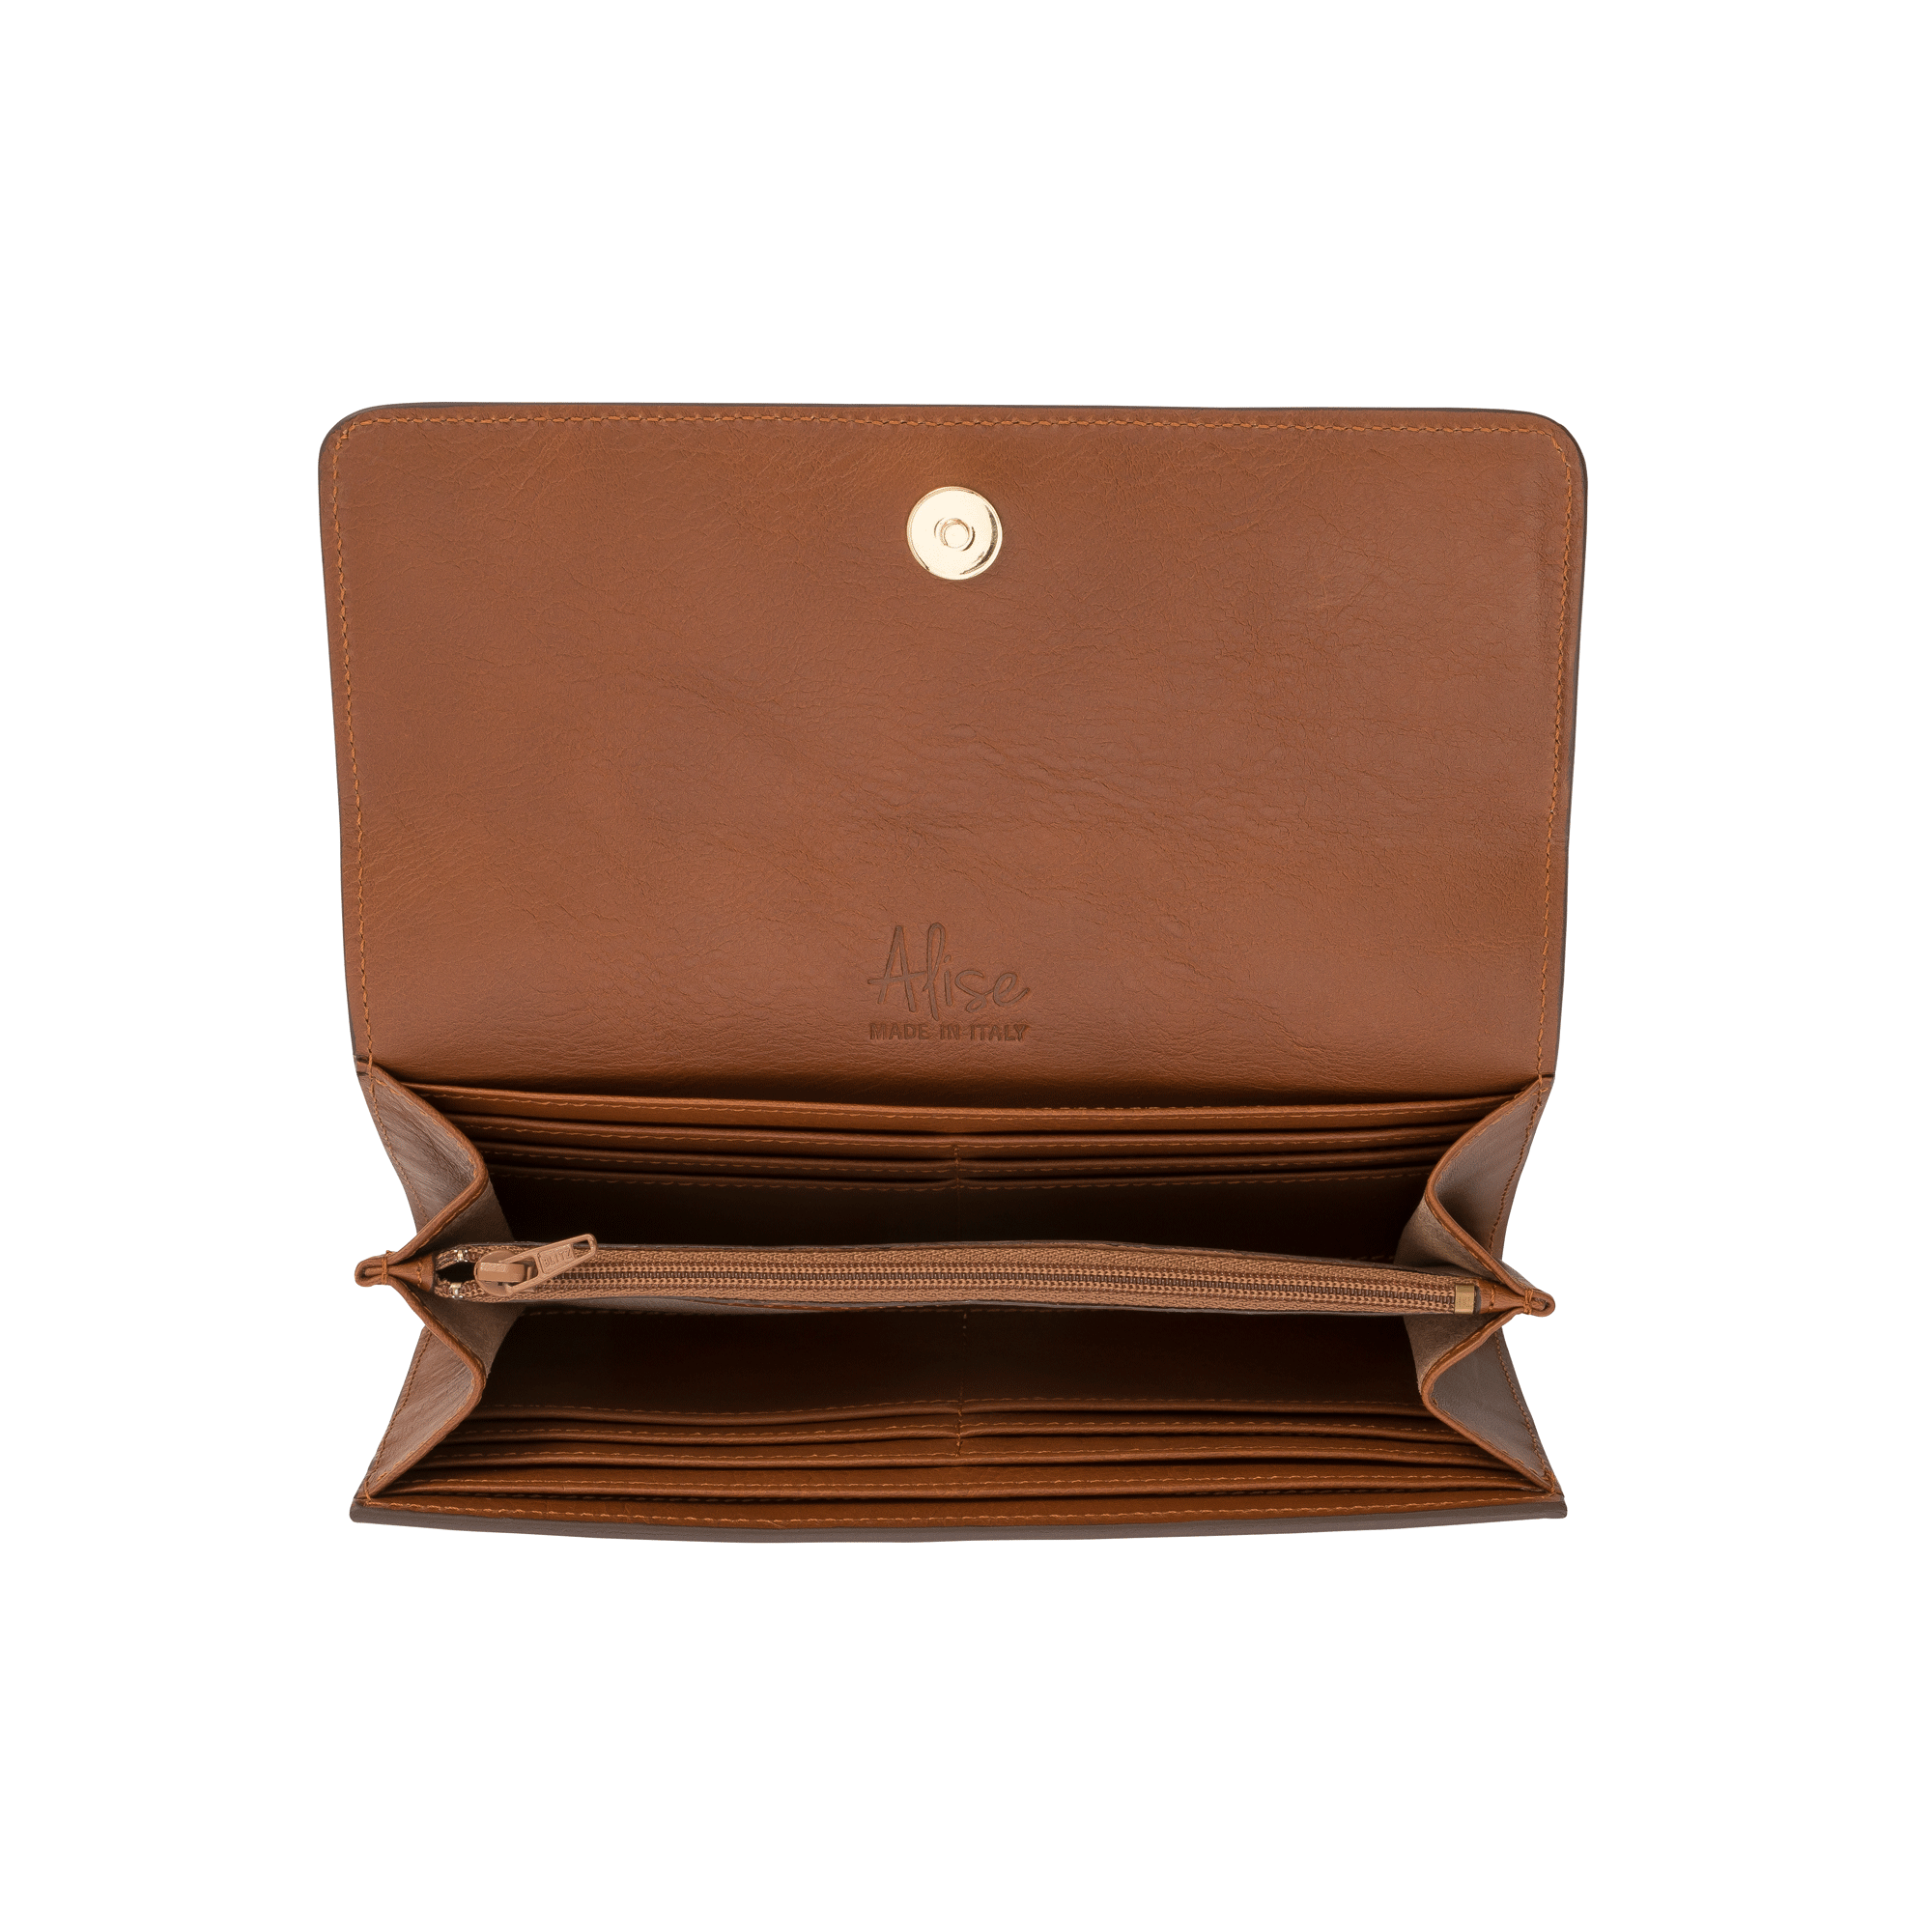 Cooper Leather Wallet - Tan - Plaasmeisie Leather Goods